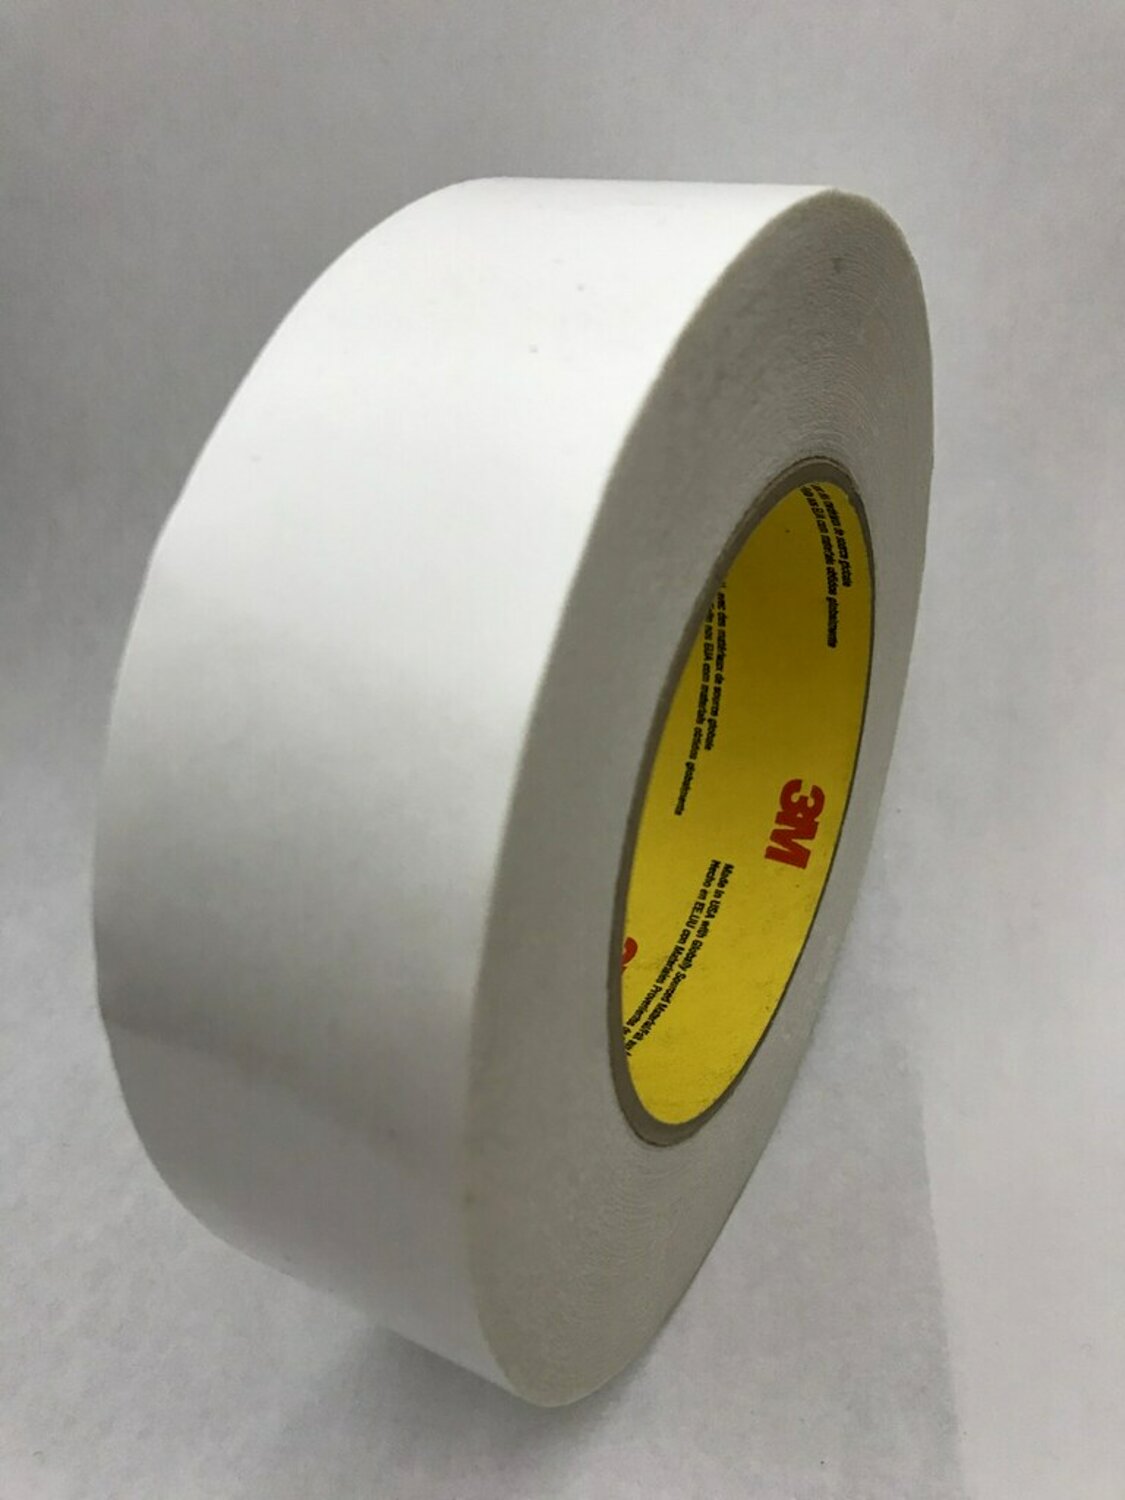 7100043925 - 3M Venture Tape Double Coated PET Tape 514CW, 1 in x 60 yd, 0.5 mil,
48 rolls per case